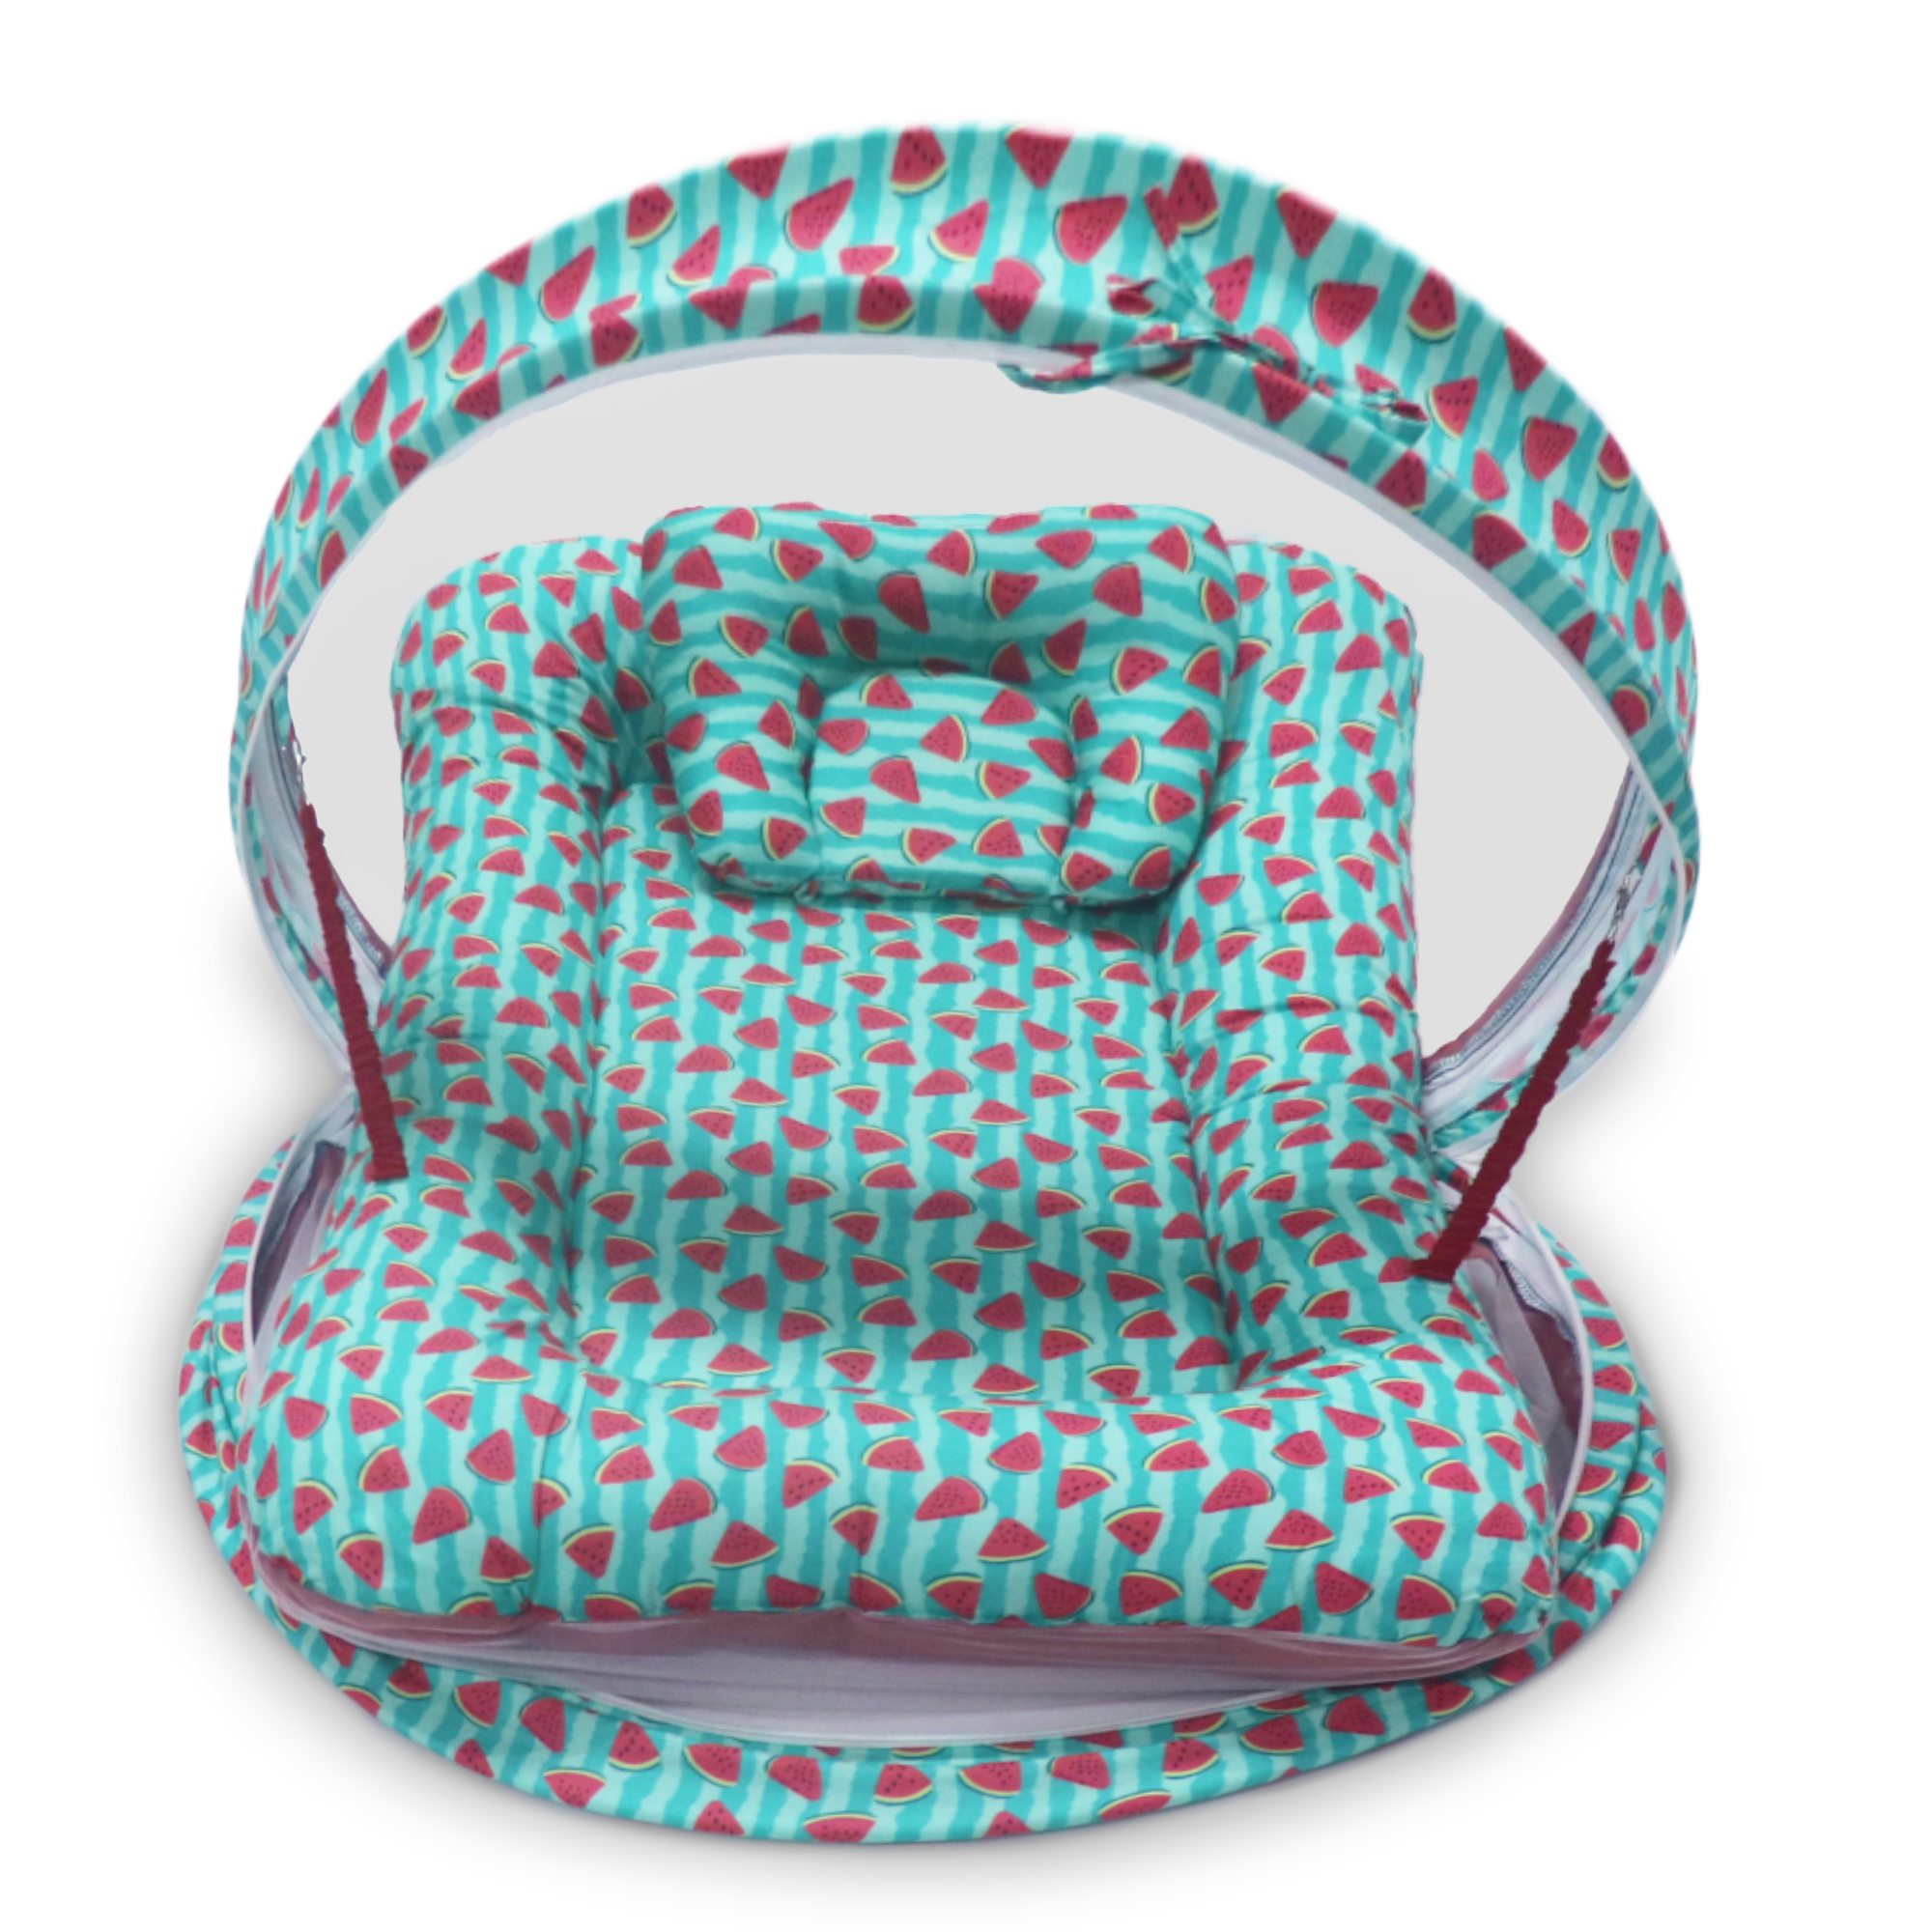 Watermelon Love -  Kradyl Kroft Bassinet Style Mosquito Net Bedding for Infants